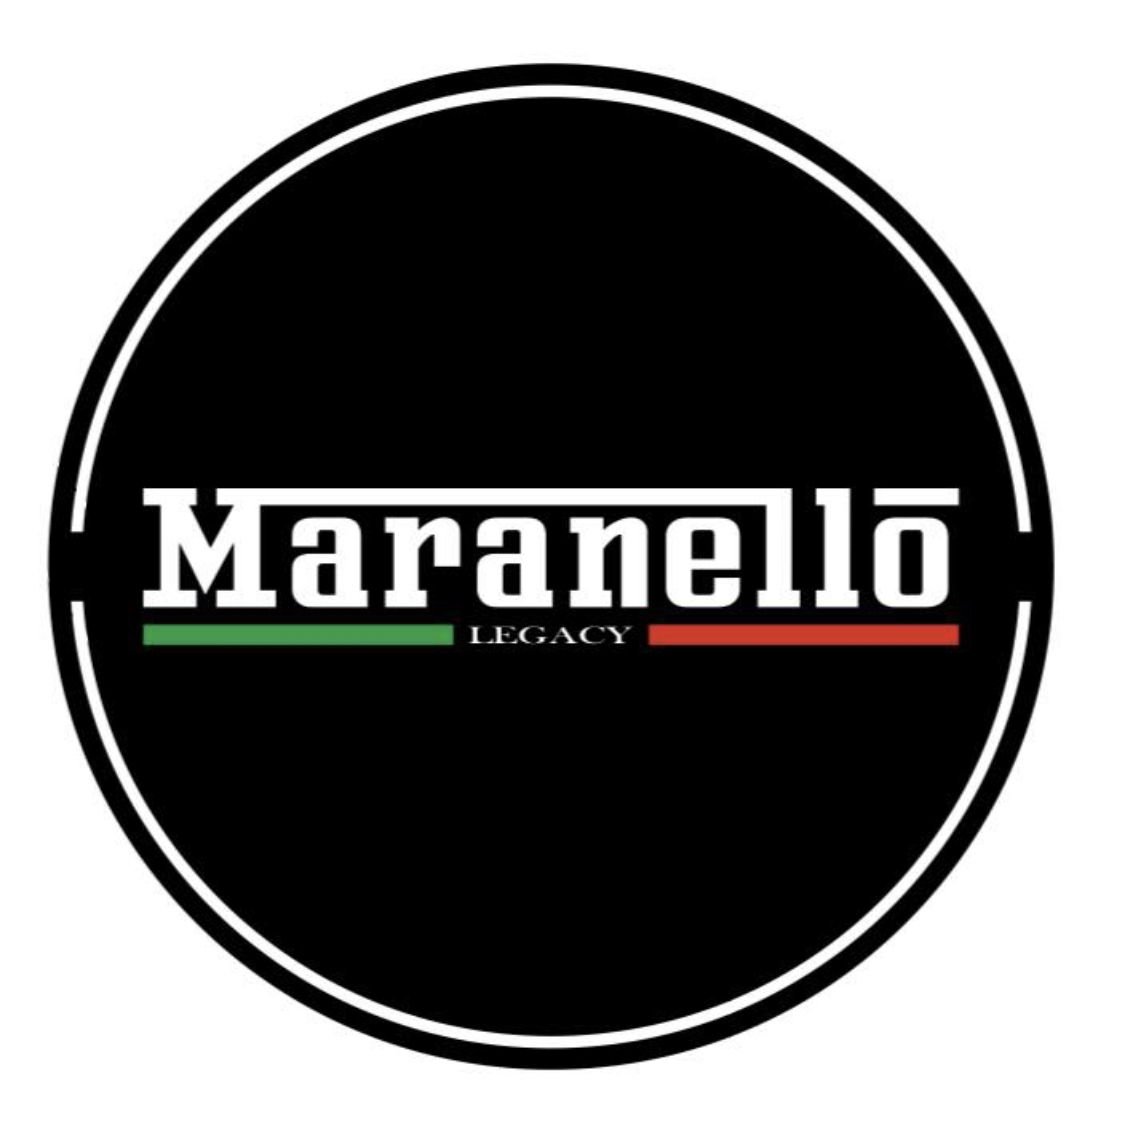 Maranello Legacy